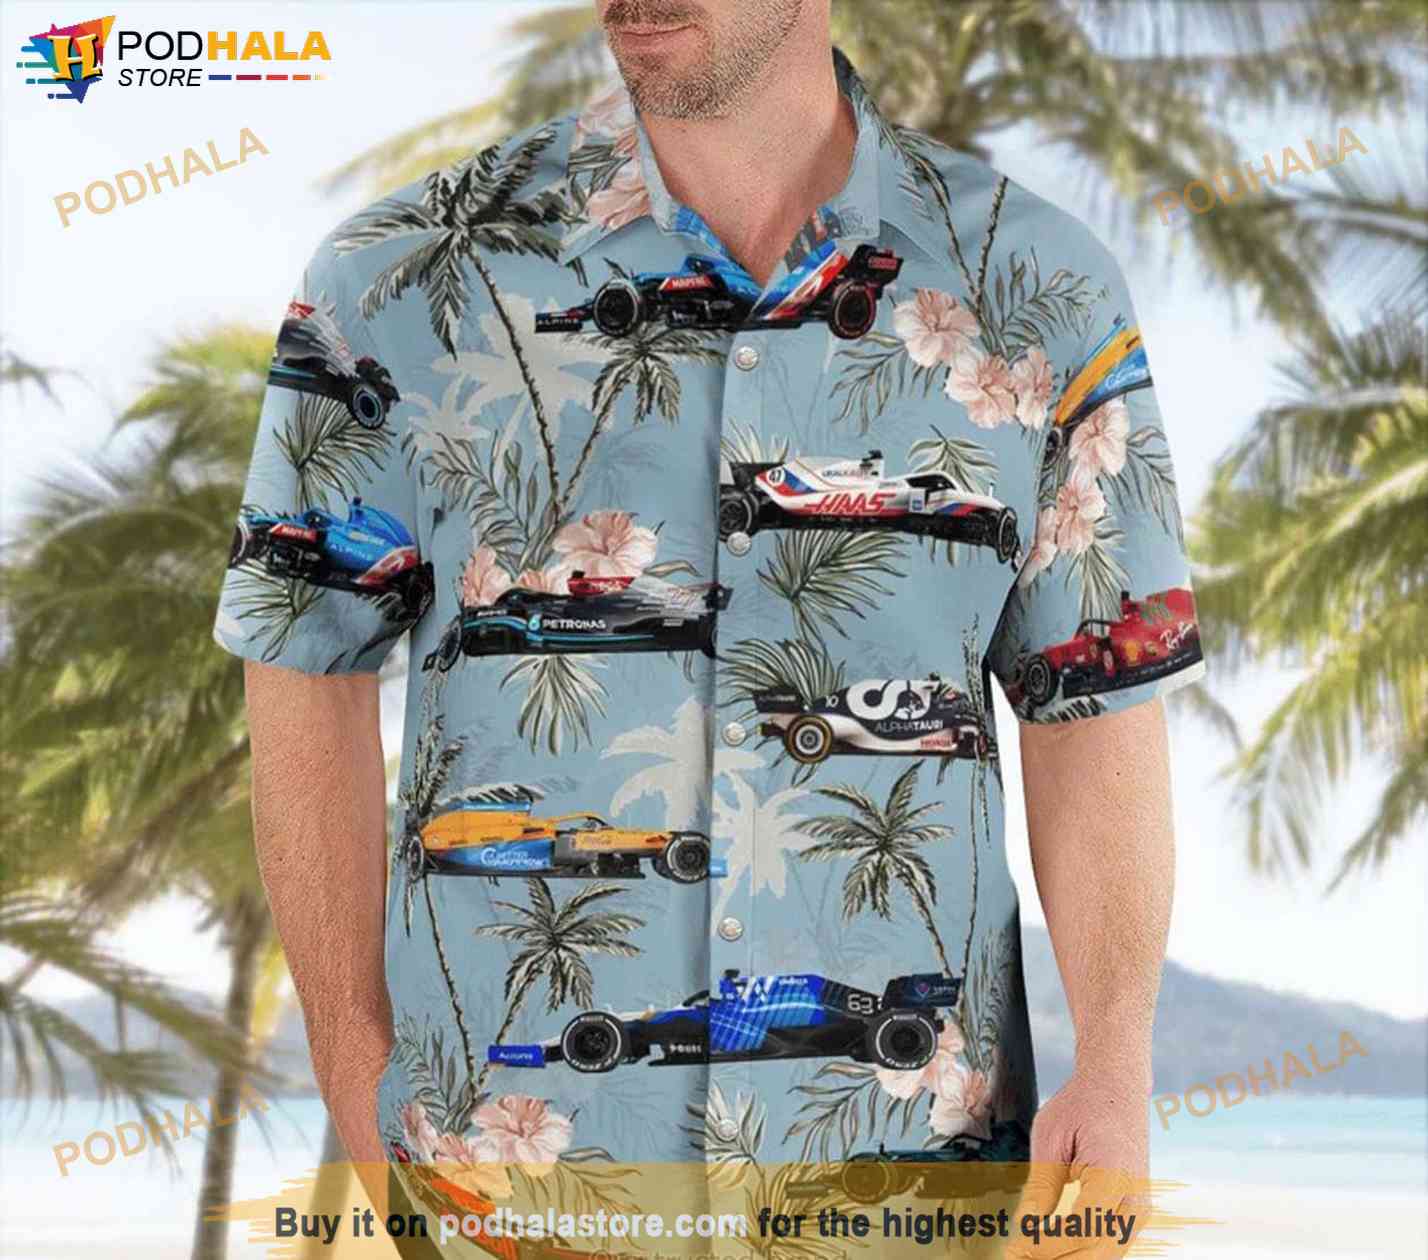 Baseball Hawaiian Shirts - Trendy Aloha